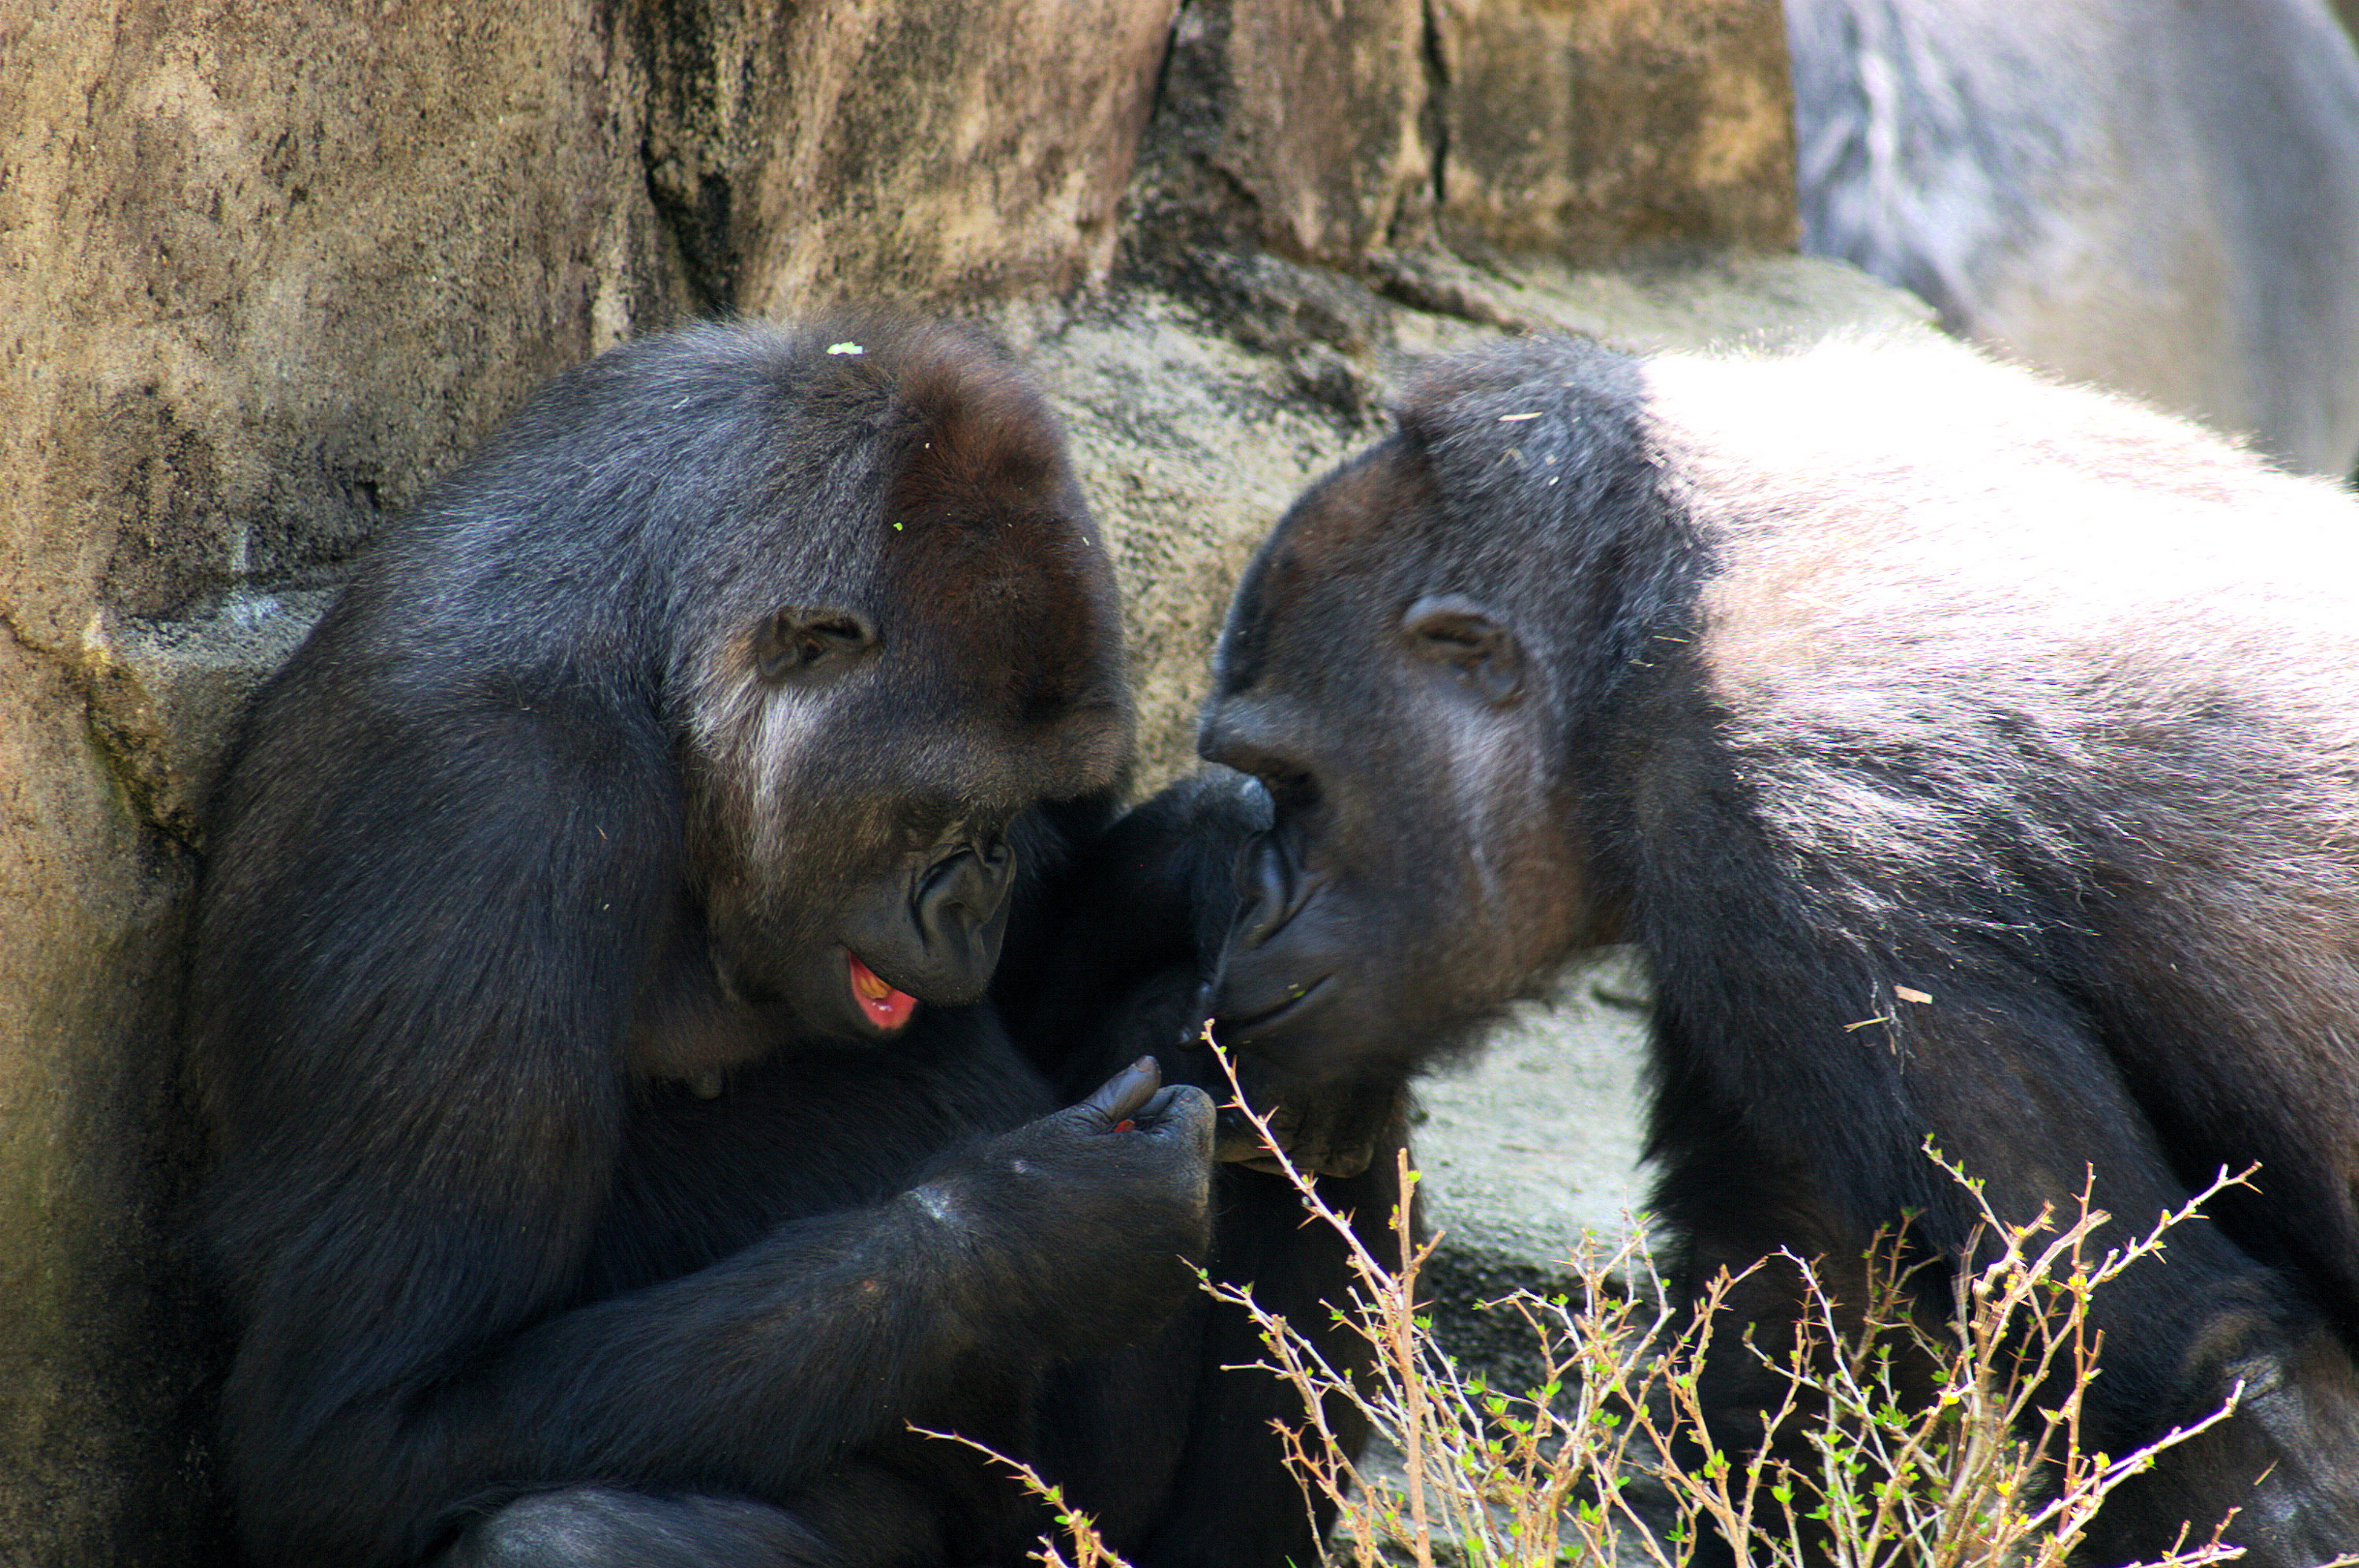 Gorillas grooming